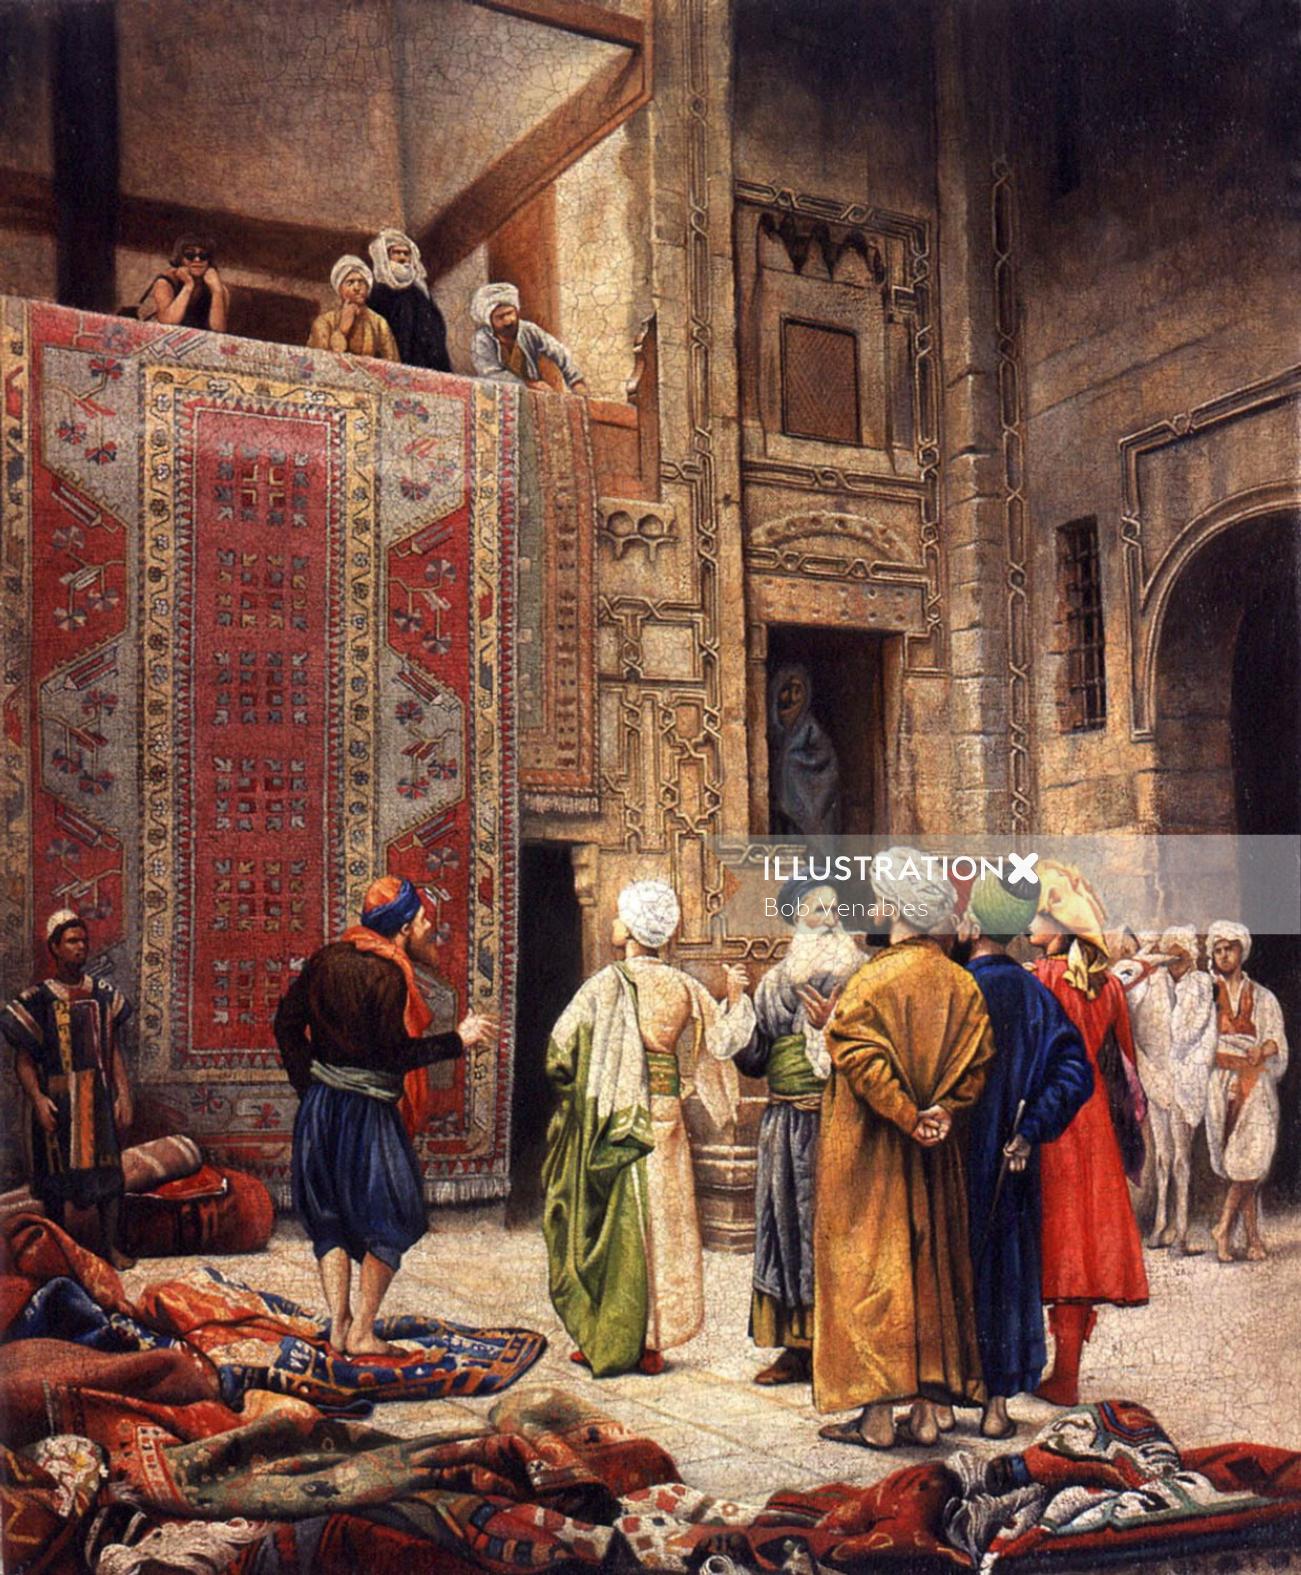 Carpet Merchant in Cairo pastiche illustration